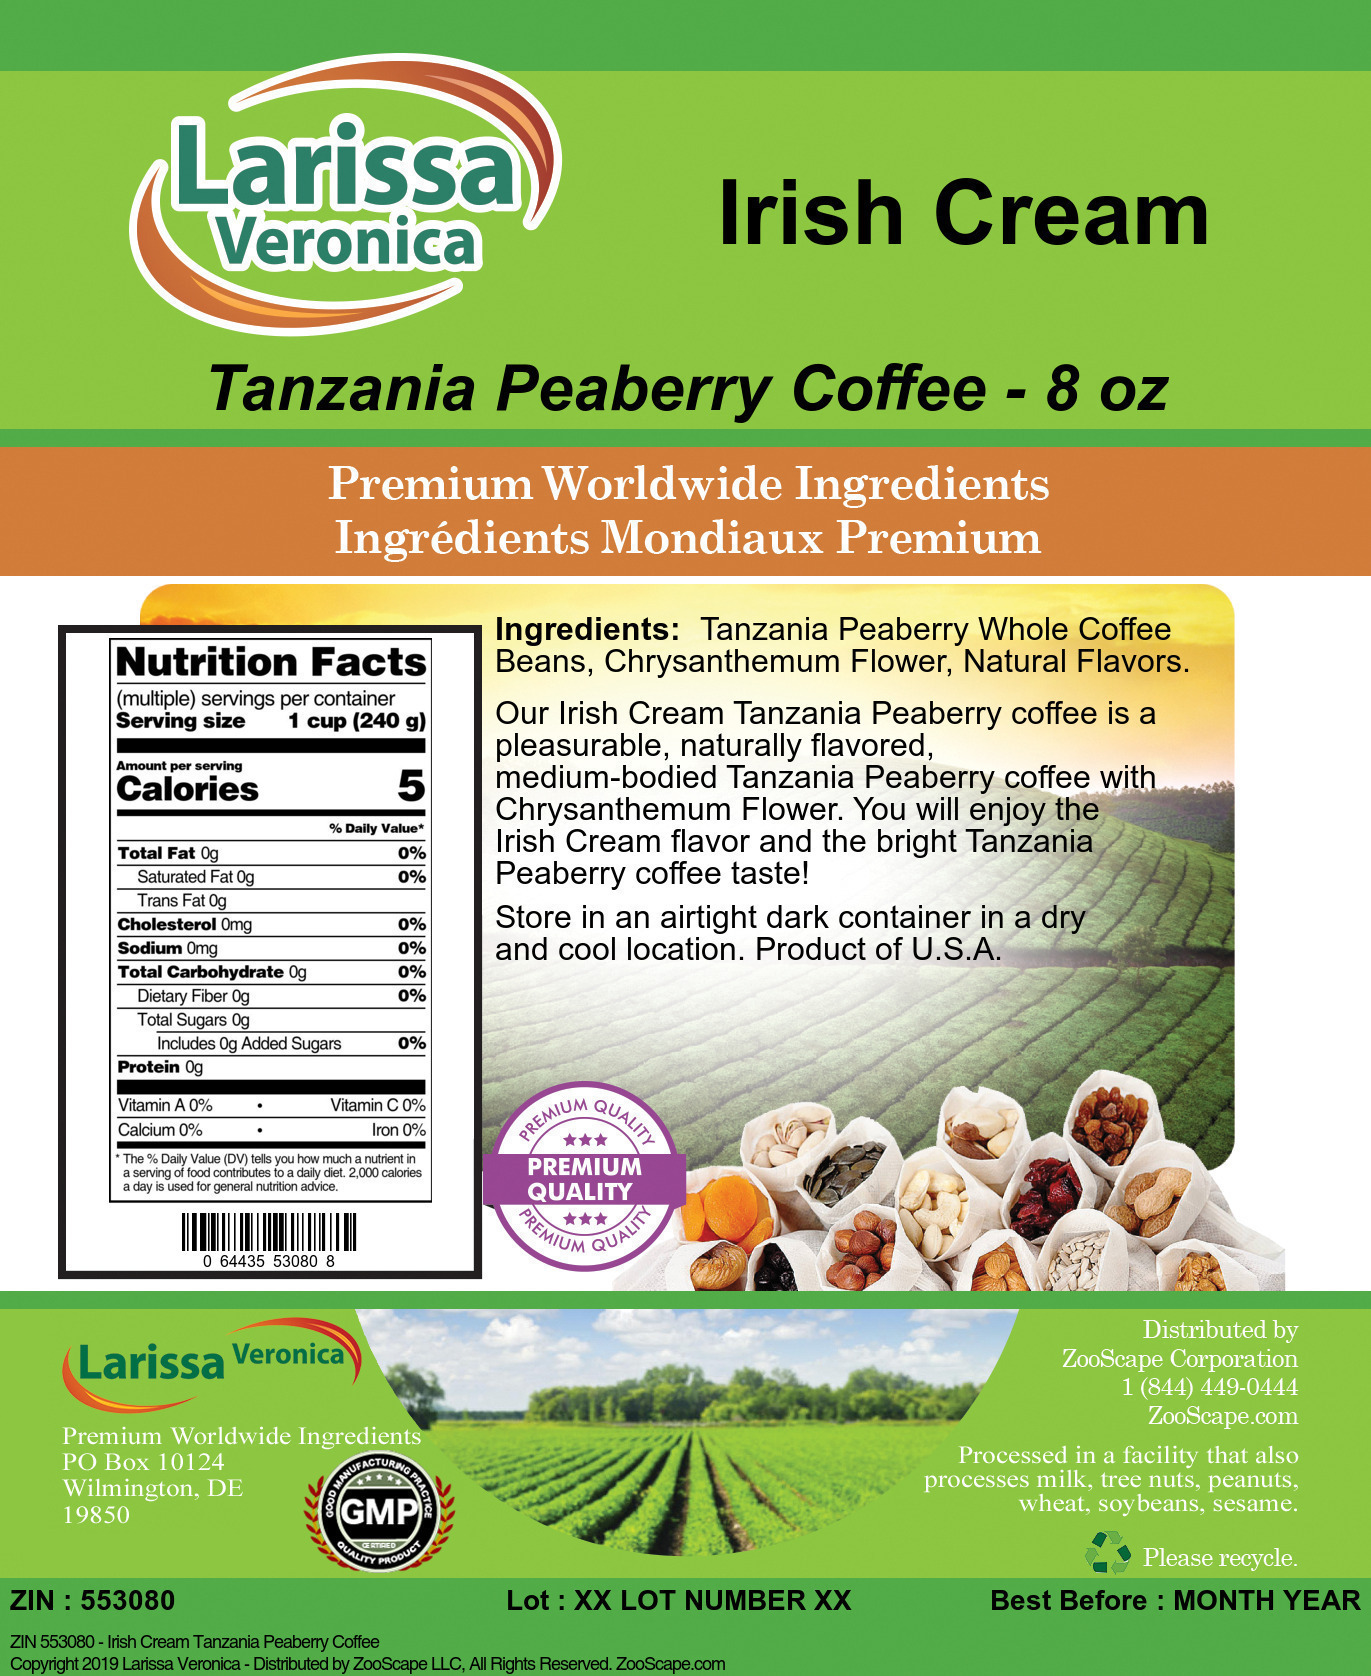 Irish Cream Tanzania Peaberry Coffee - Label